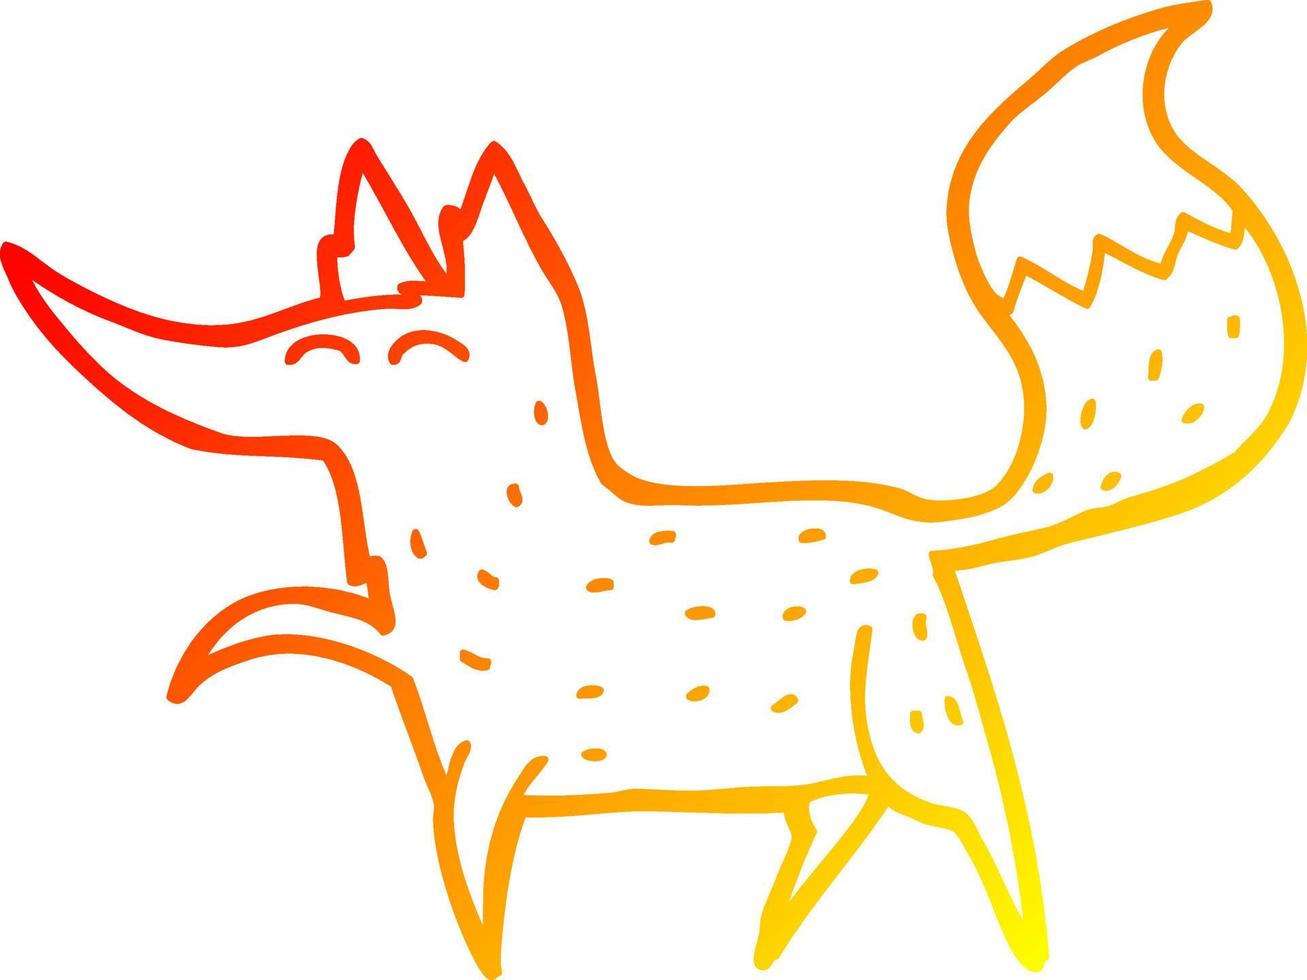 warm gradient line drawing cartoon fox vector